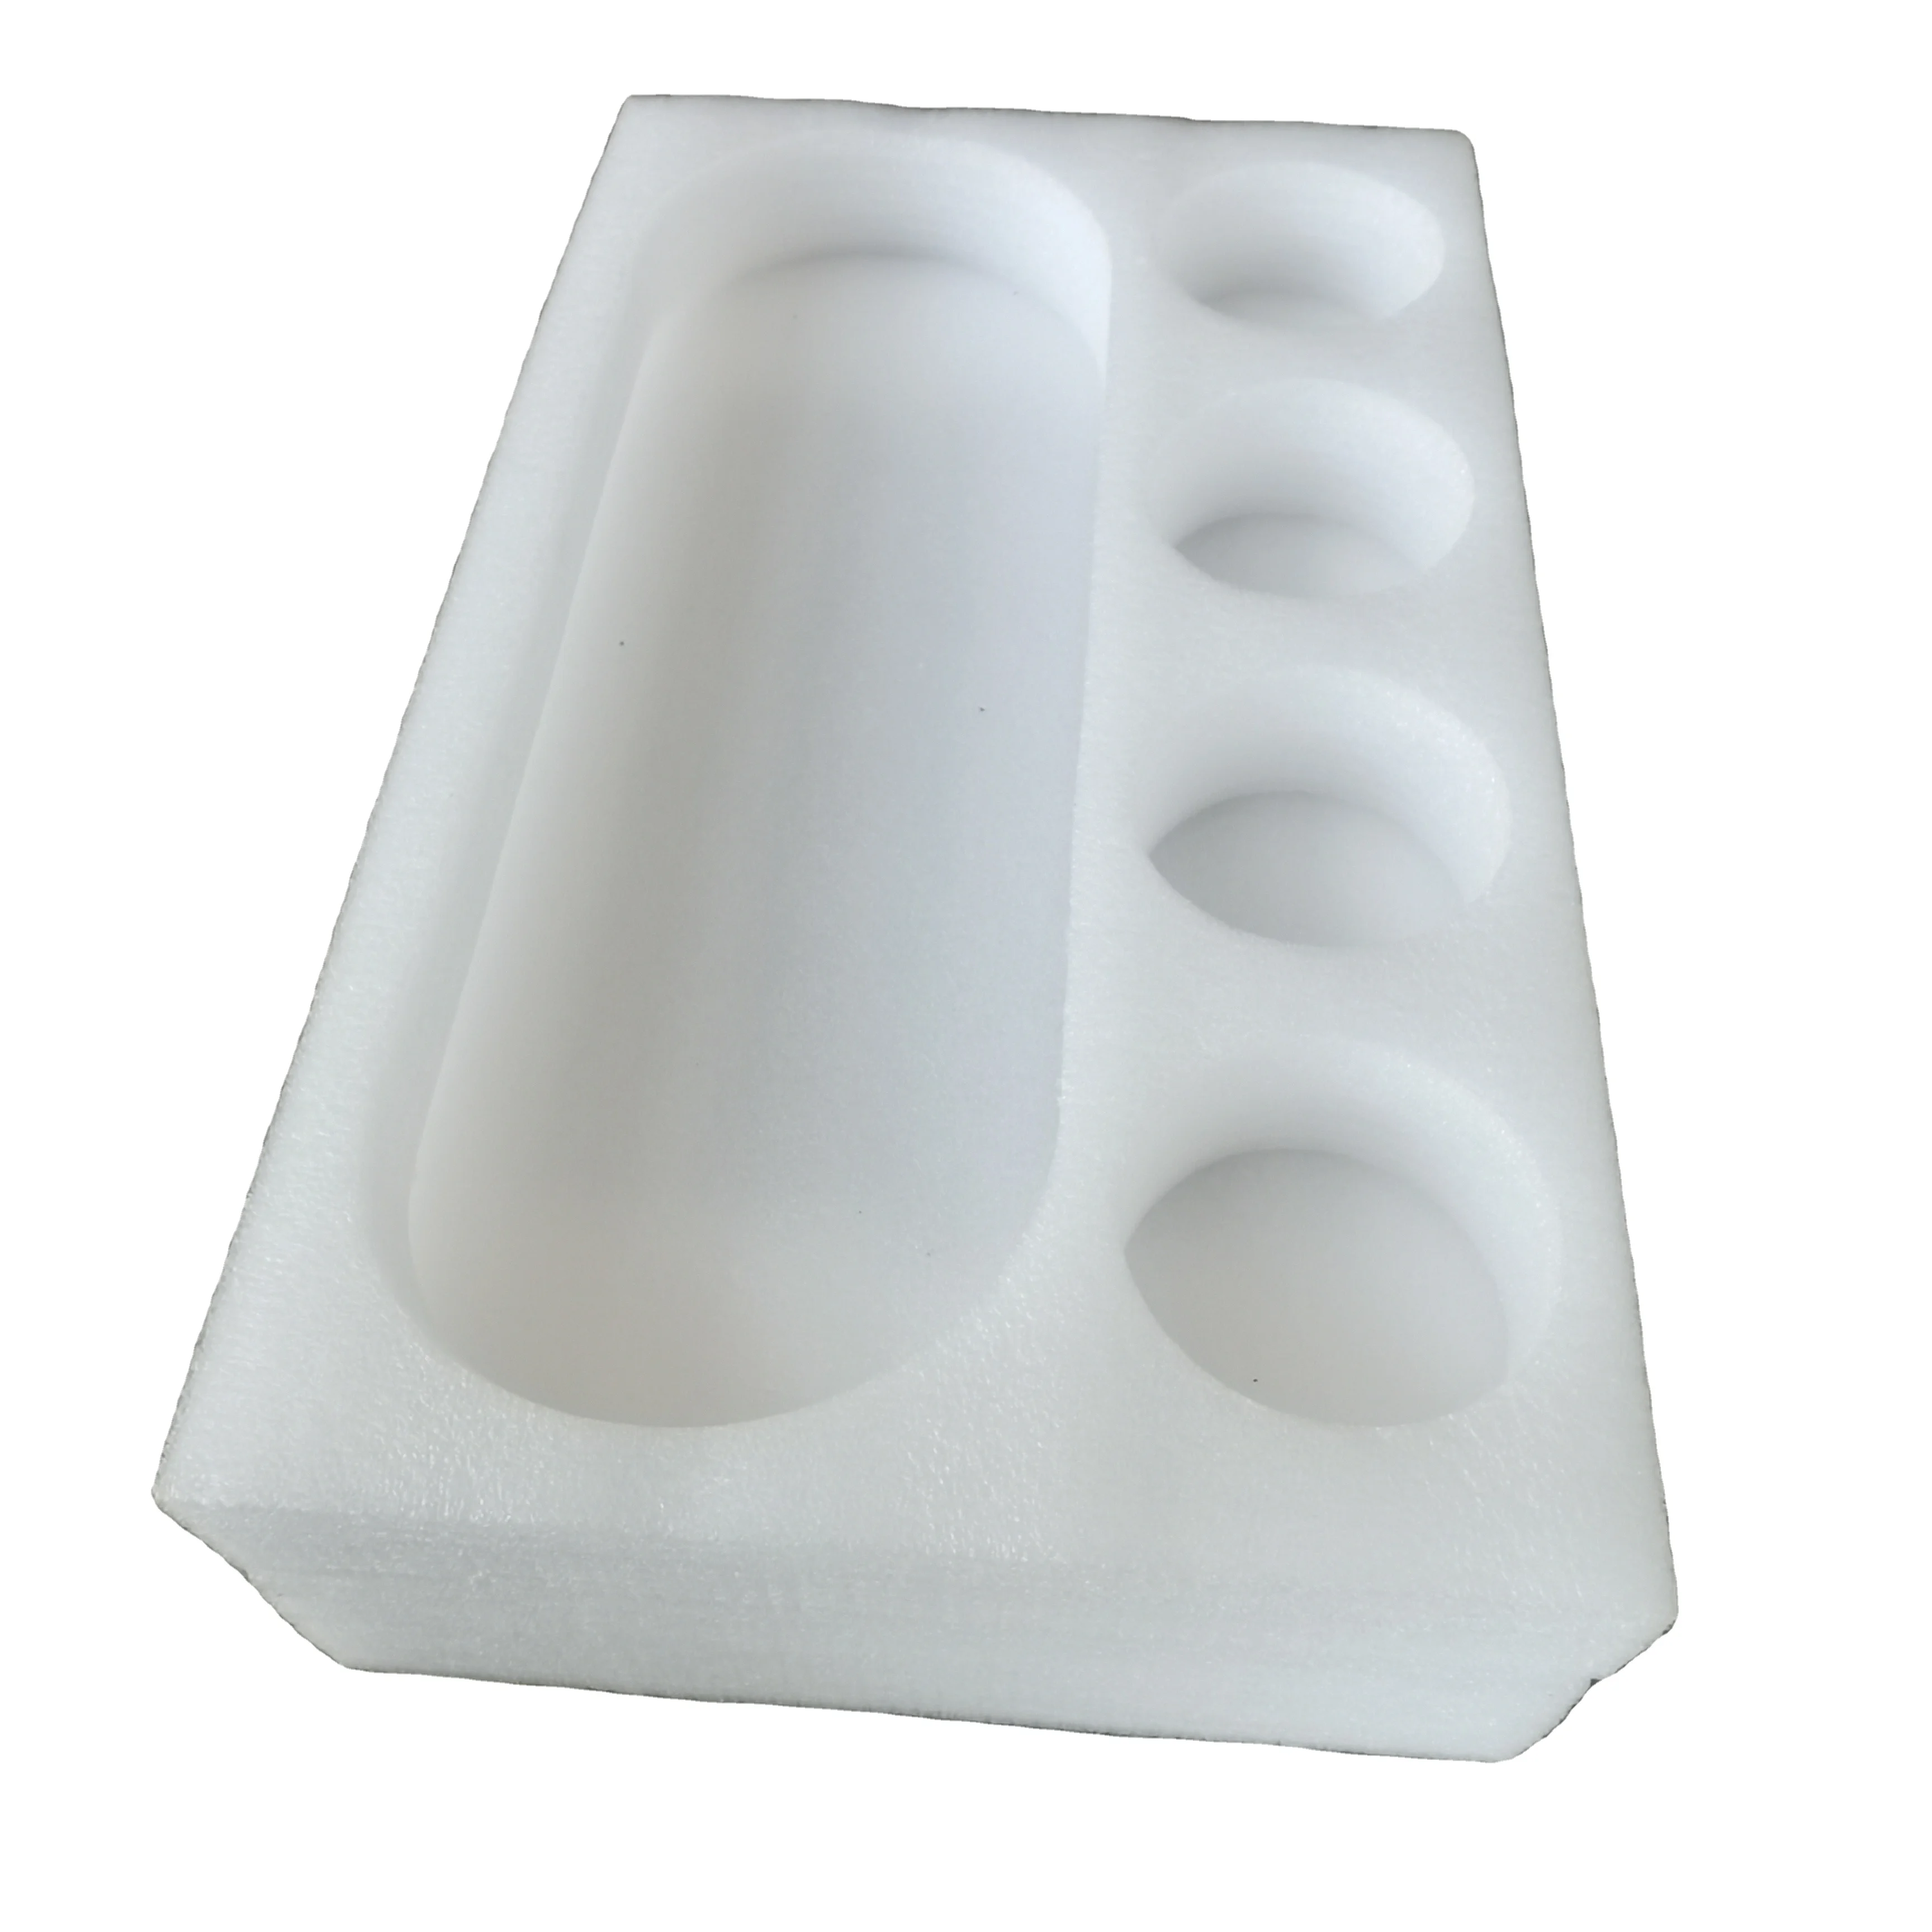 Oem Customized Foam Packaging Epe Custom Packaging Foam - Buy Oem